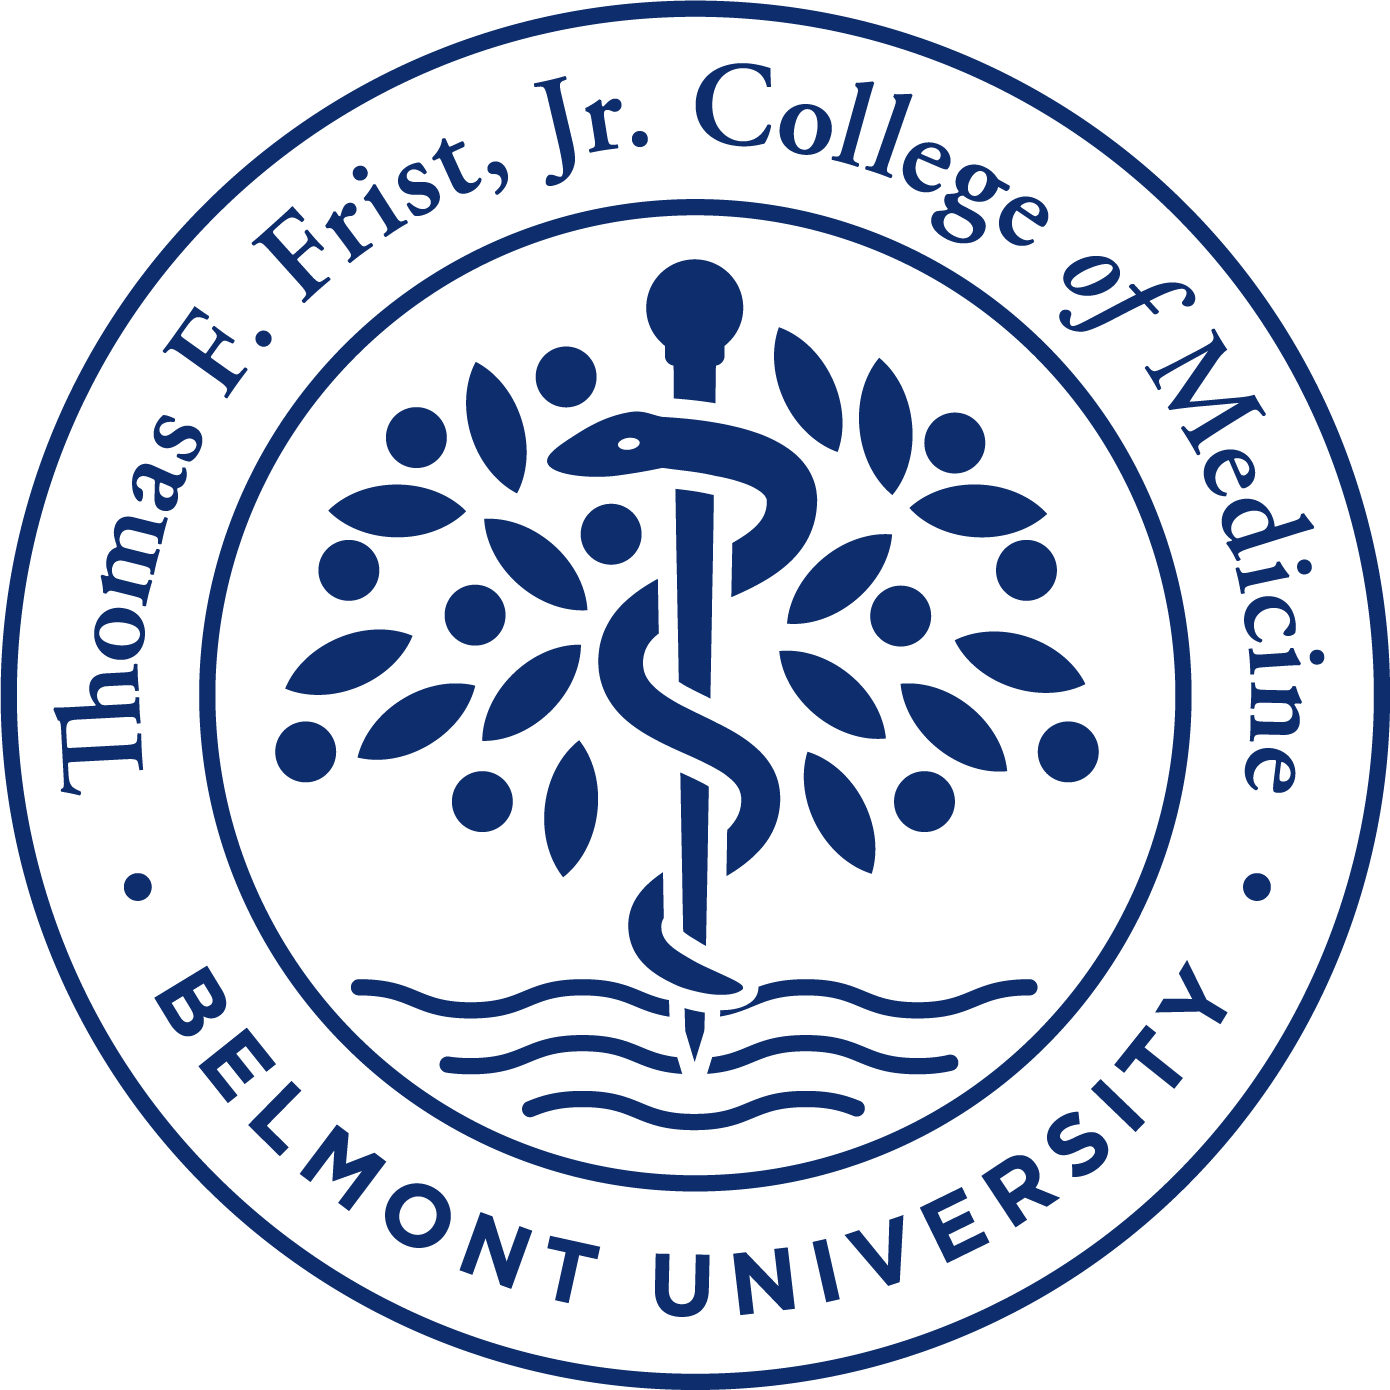 Thomas F. Frist, Jr., College of Medicine at Belmont University Seal